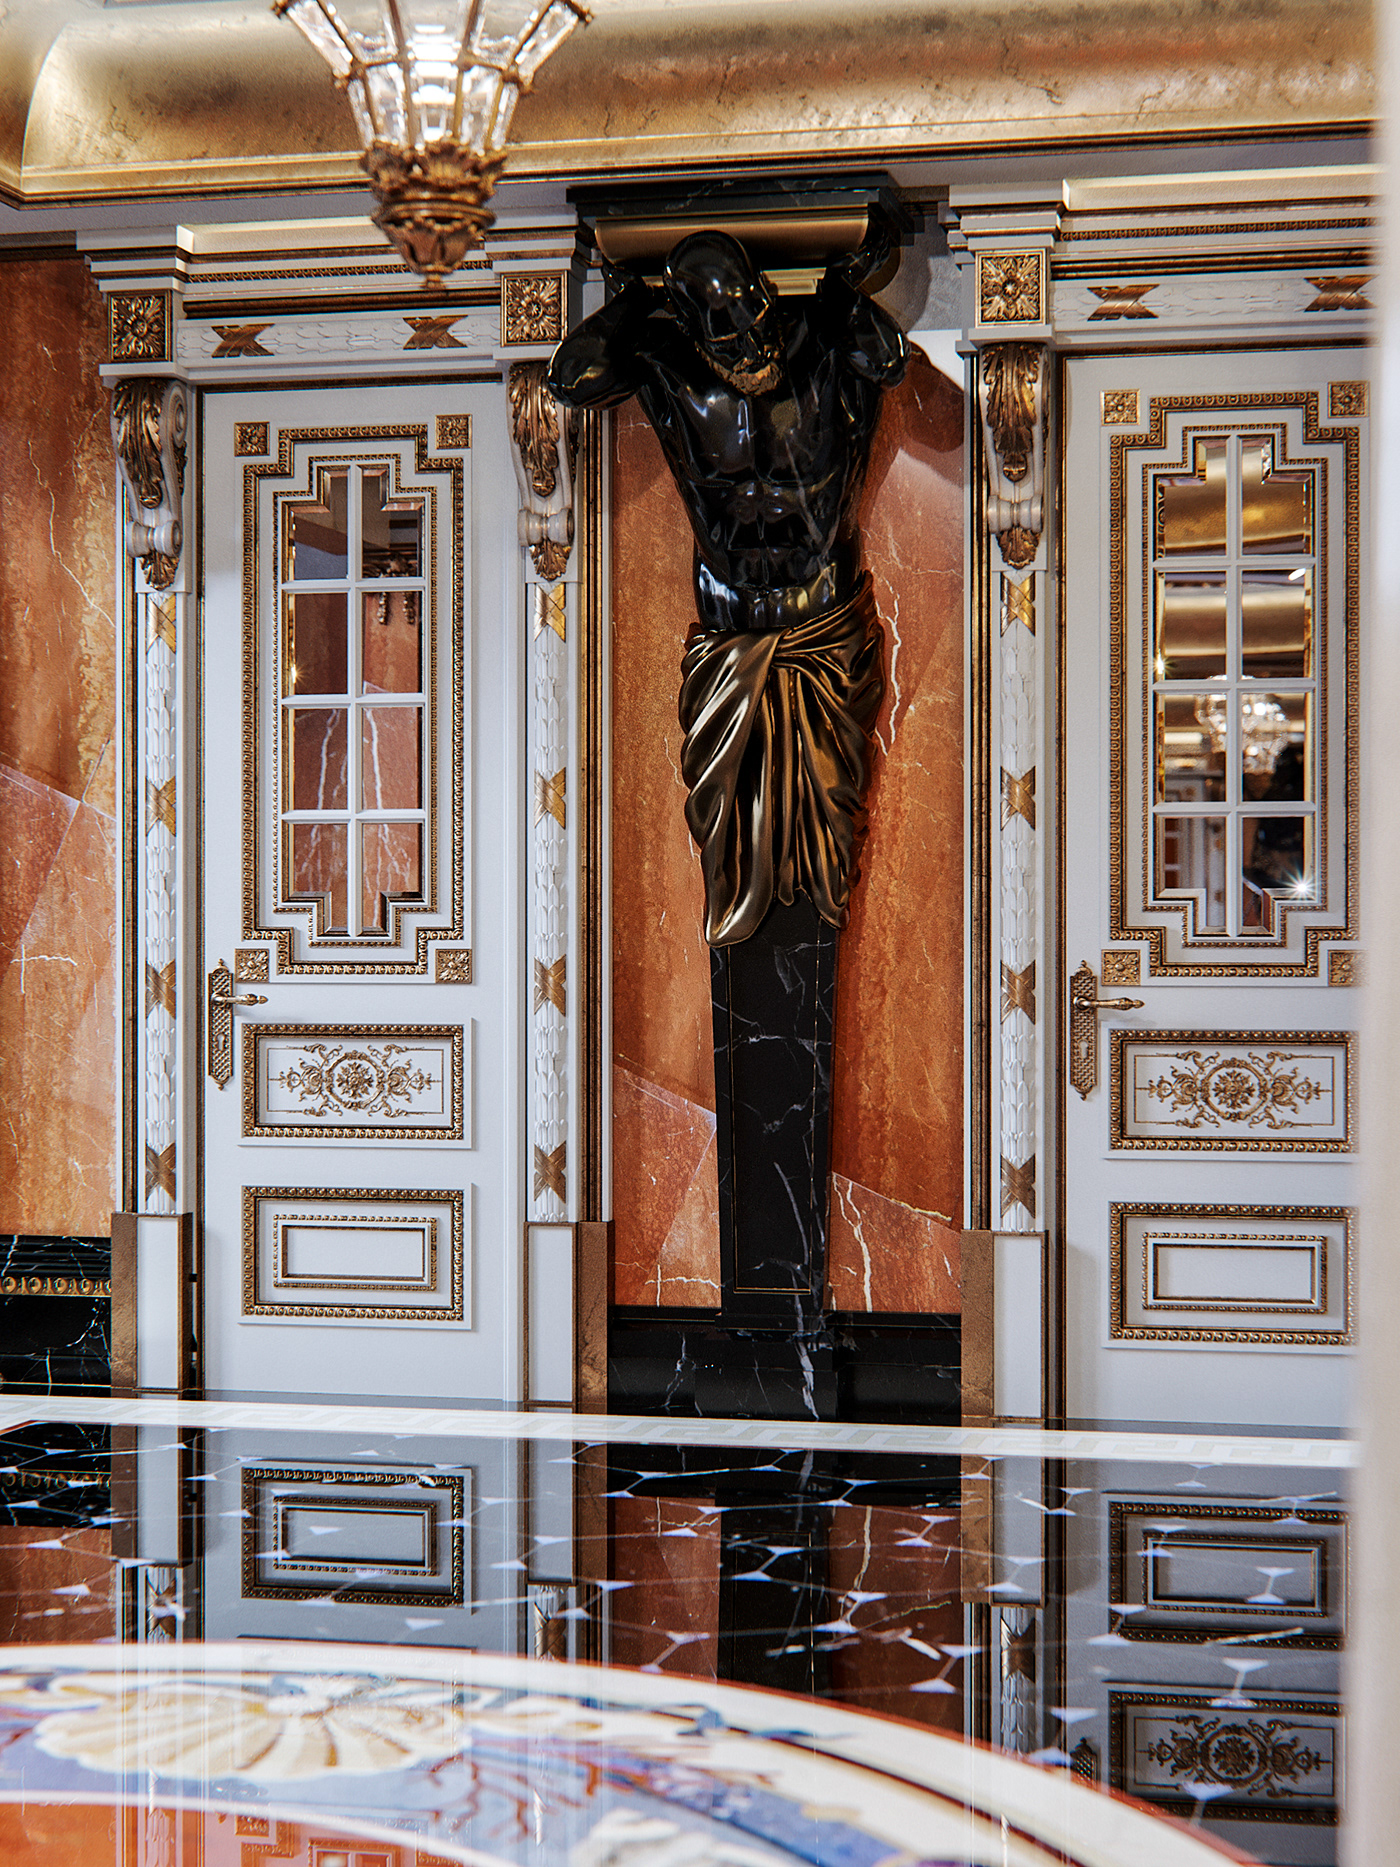 Hall Barocco sculpture clasics Interior Marble